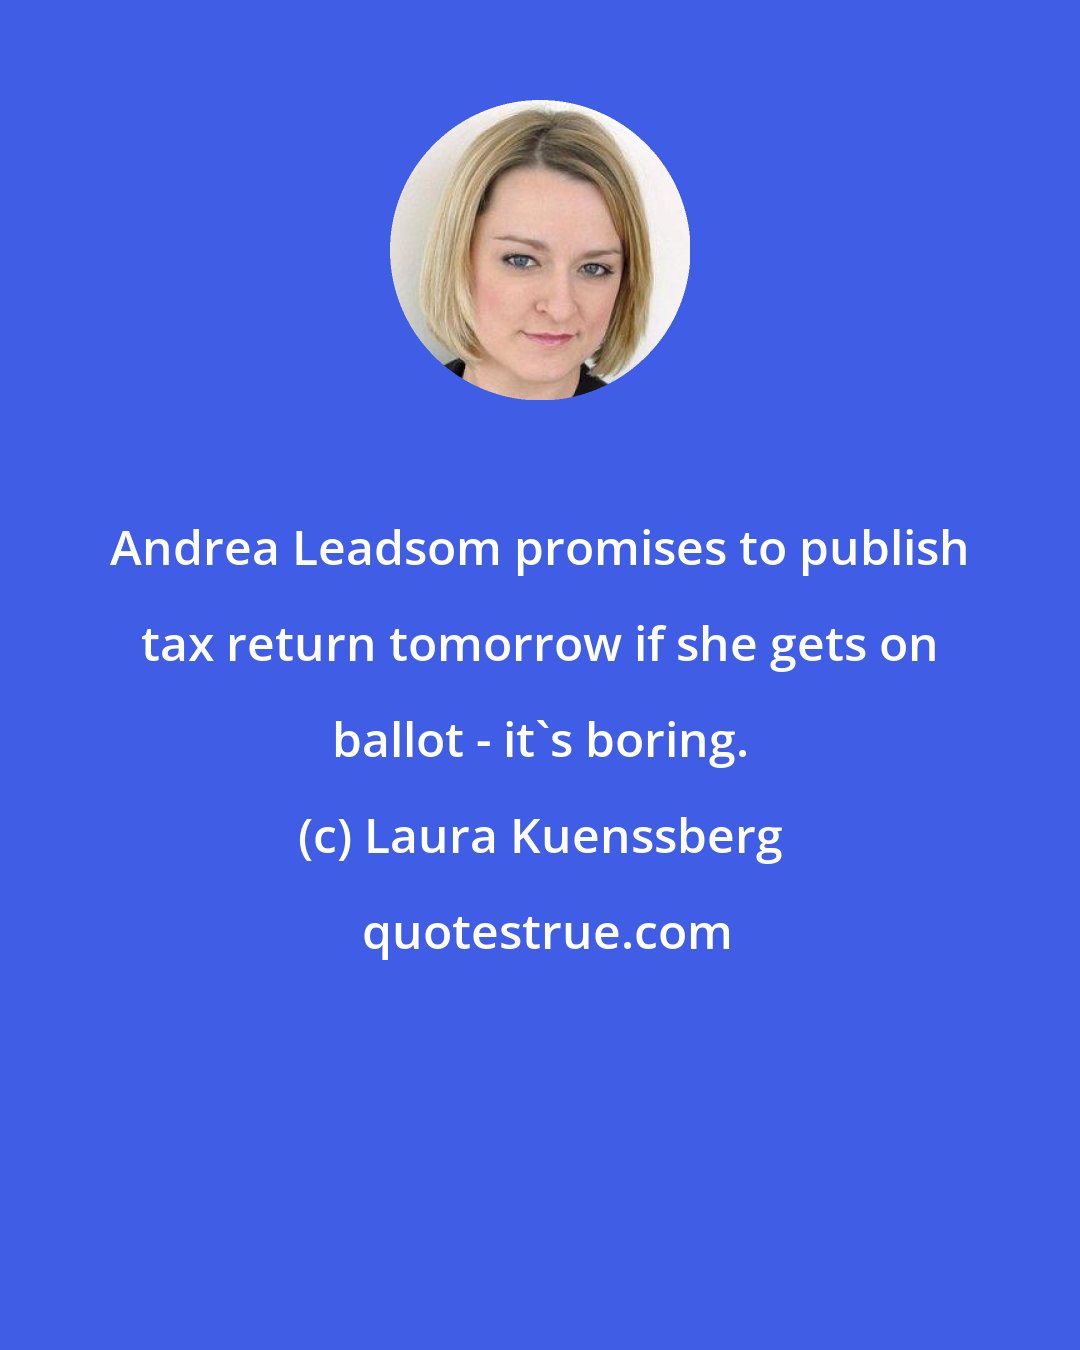 Laura Kuenssberg: Andrea Leadsom promises to publish tax return tomorrow if she gets on ballot - it's boring.